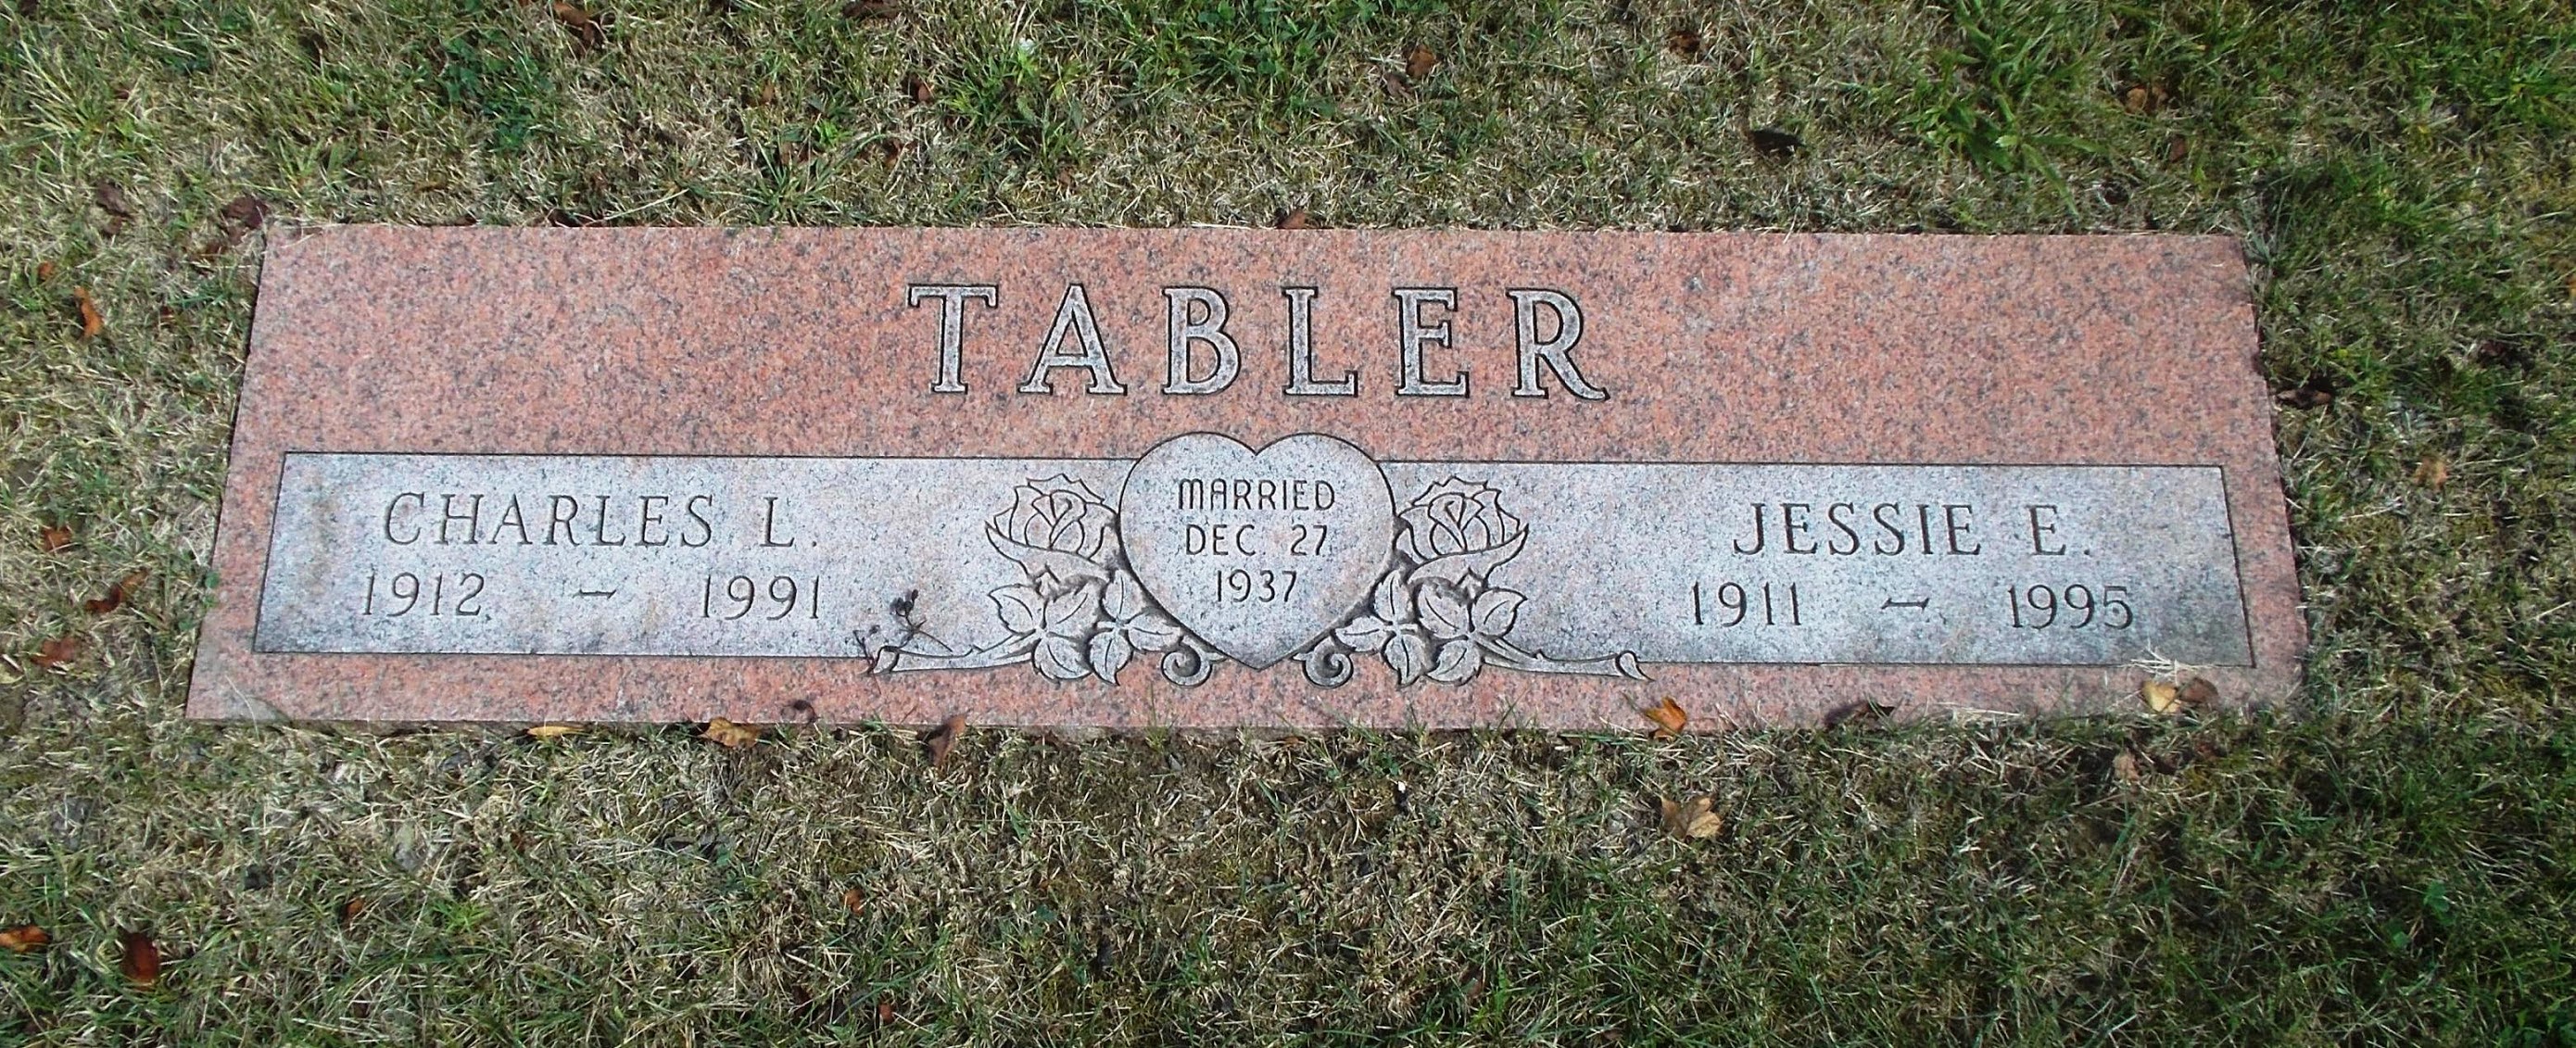 Jessie E Tabler